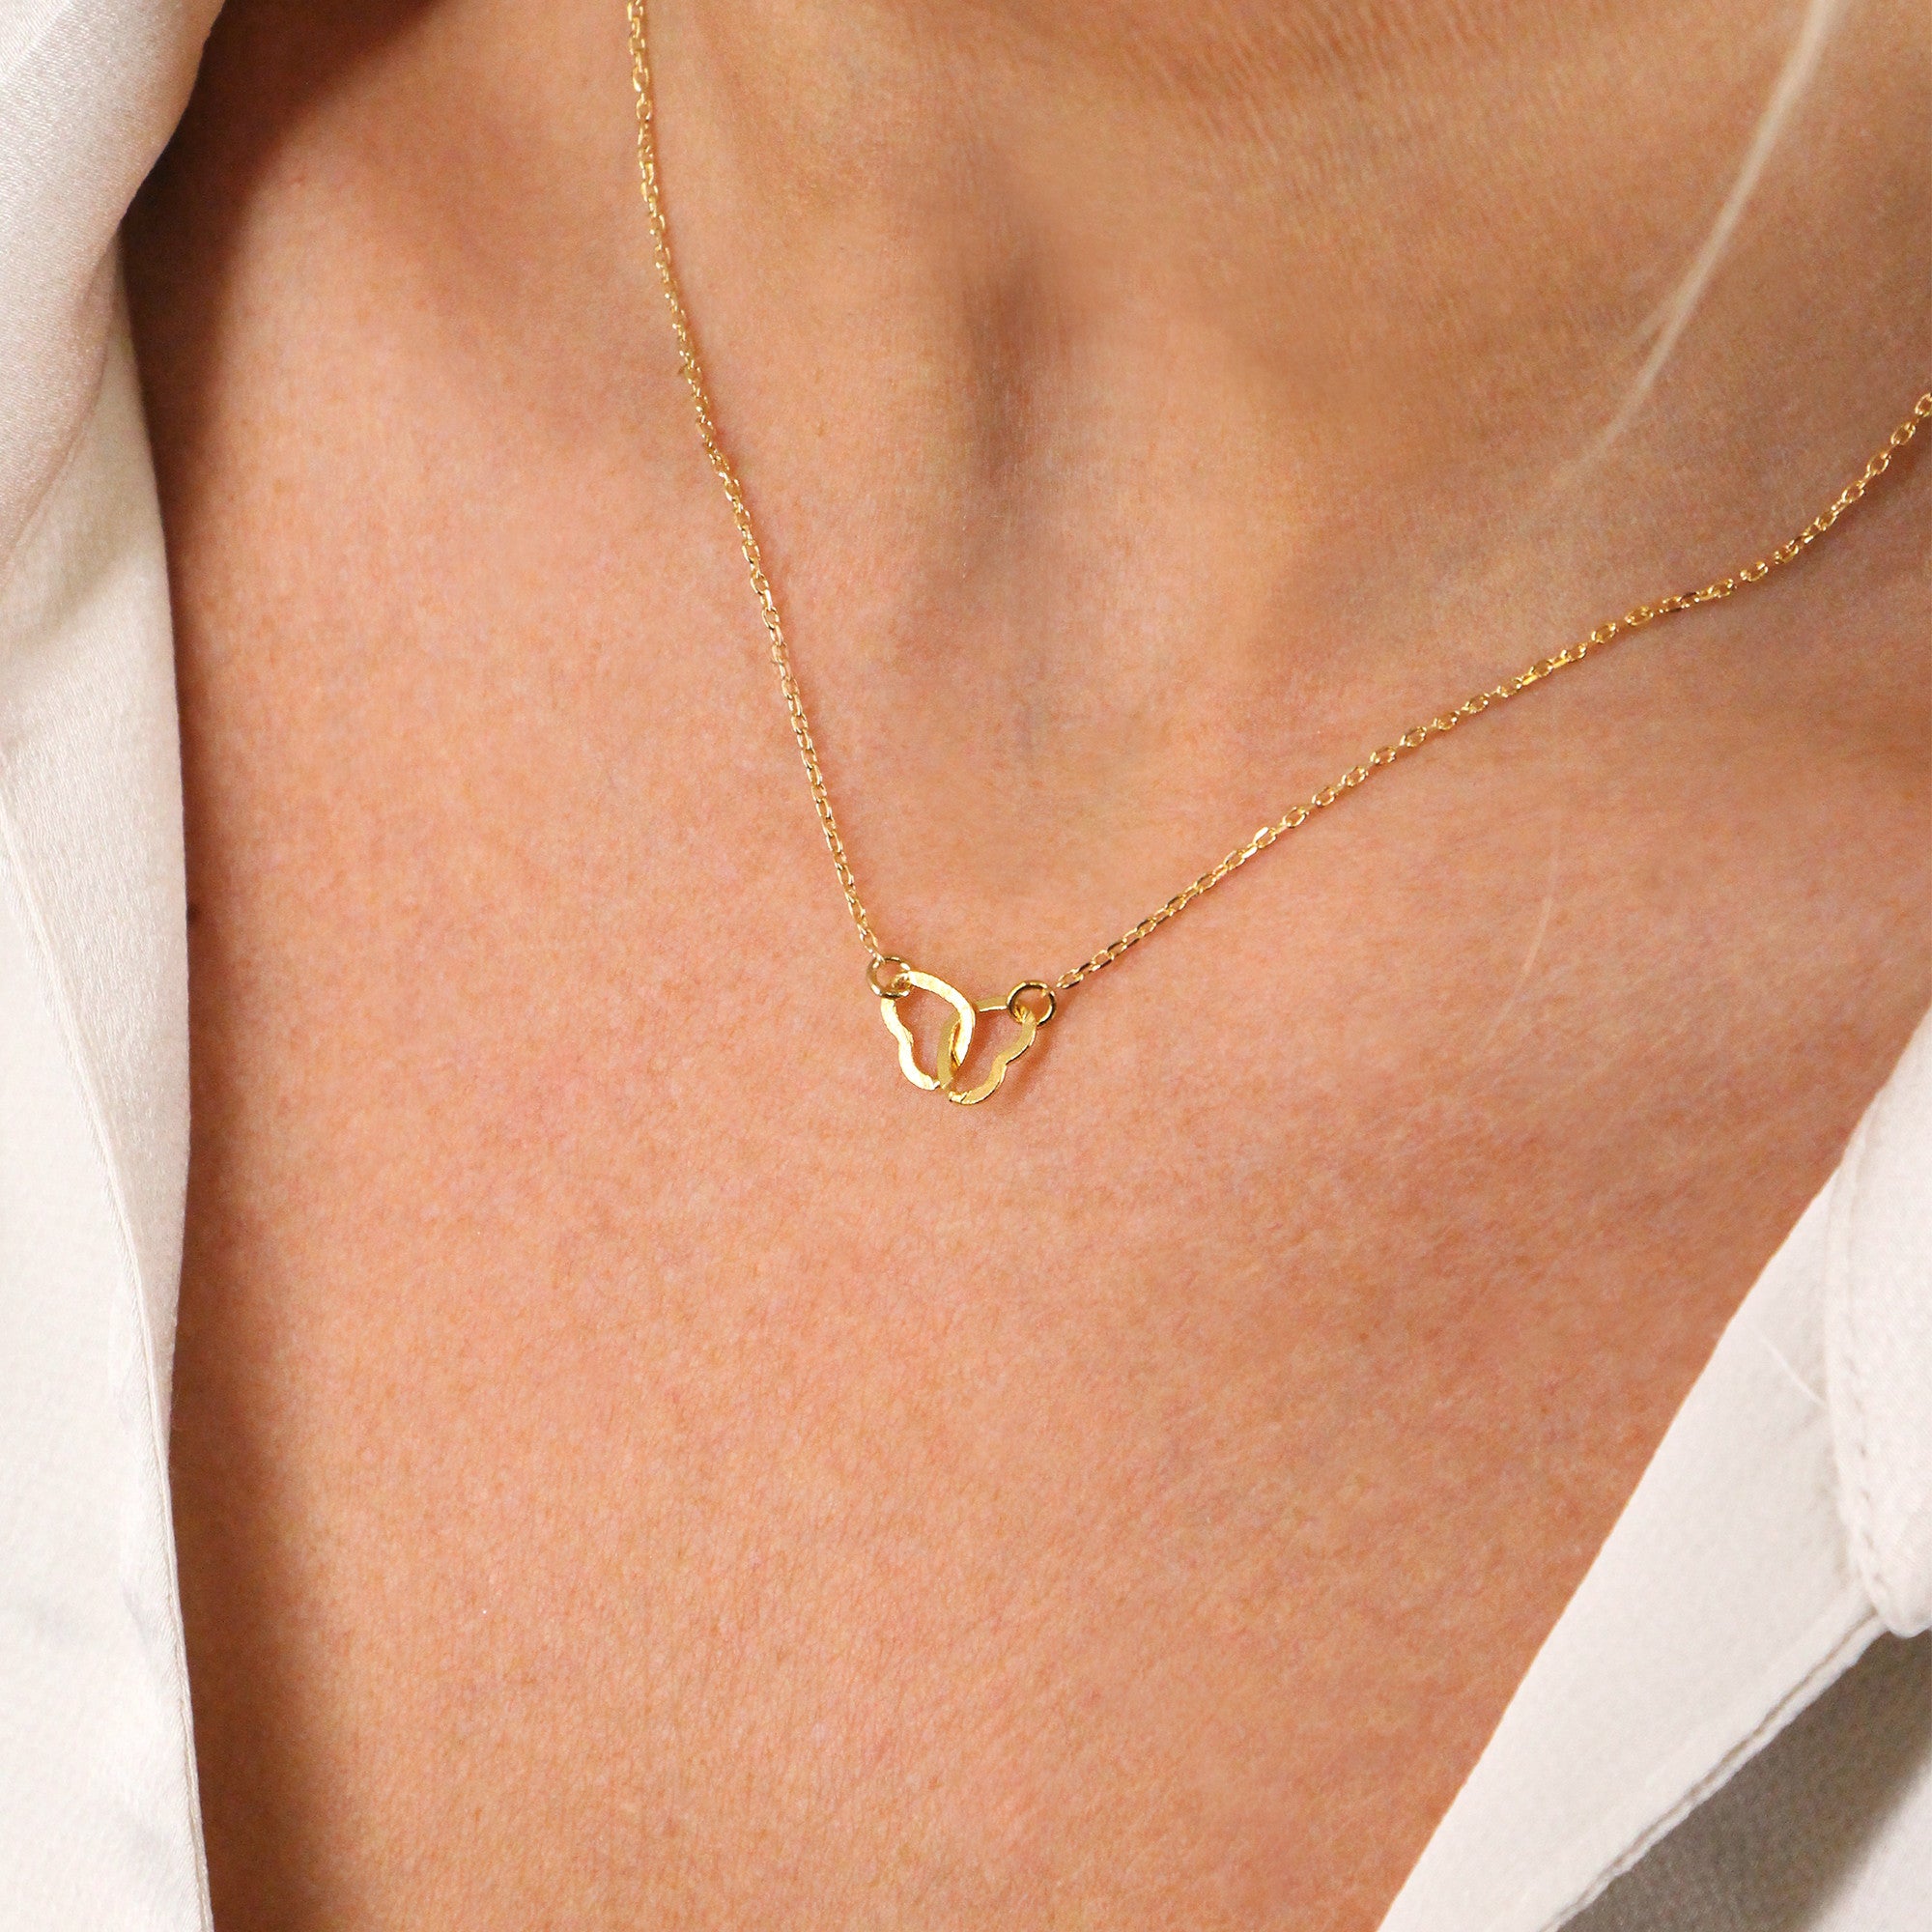 Little heart necklace